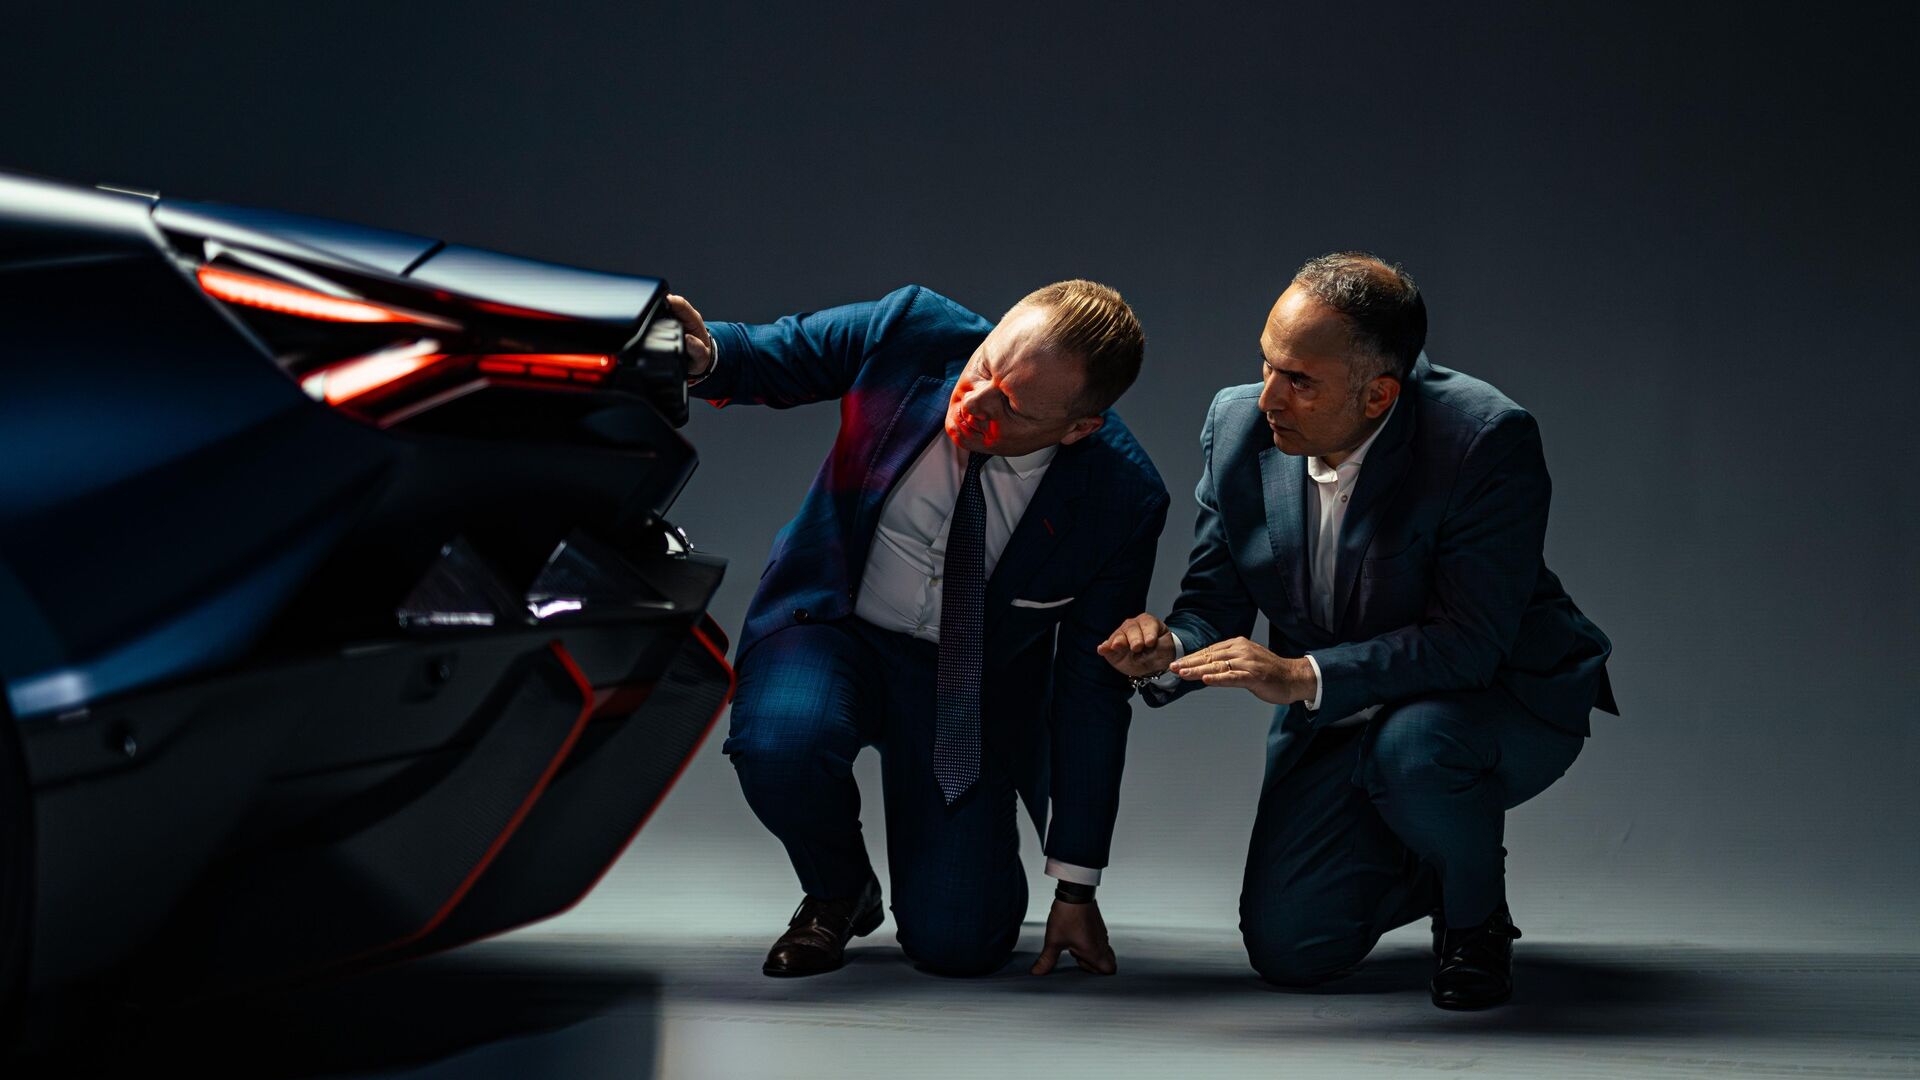 Design et aérodynamique : Mitja Borkert et Ugo Riccio d'Automobili Lamborghini